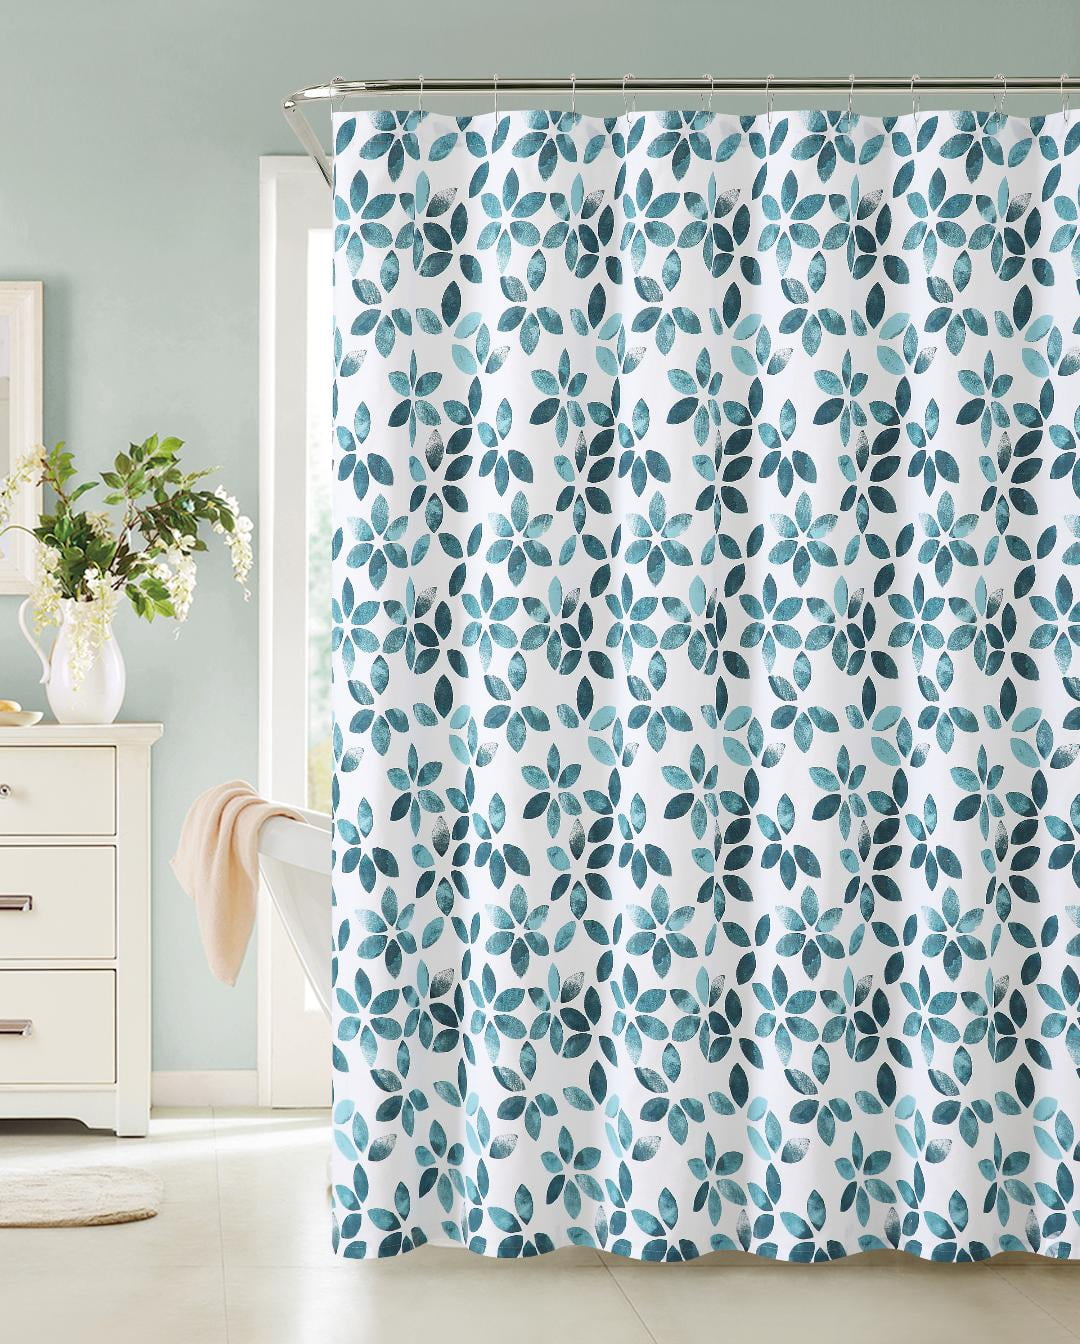 Primitive Striped Floral Design Aqua Blue Fabric Shower Curtain 70 by 72 